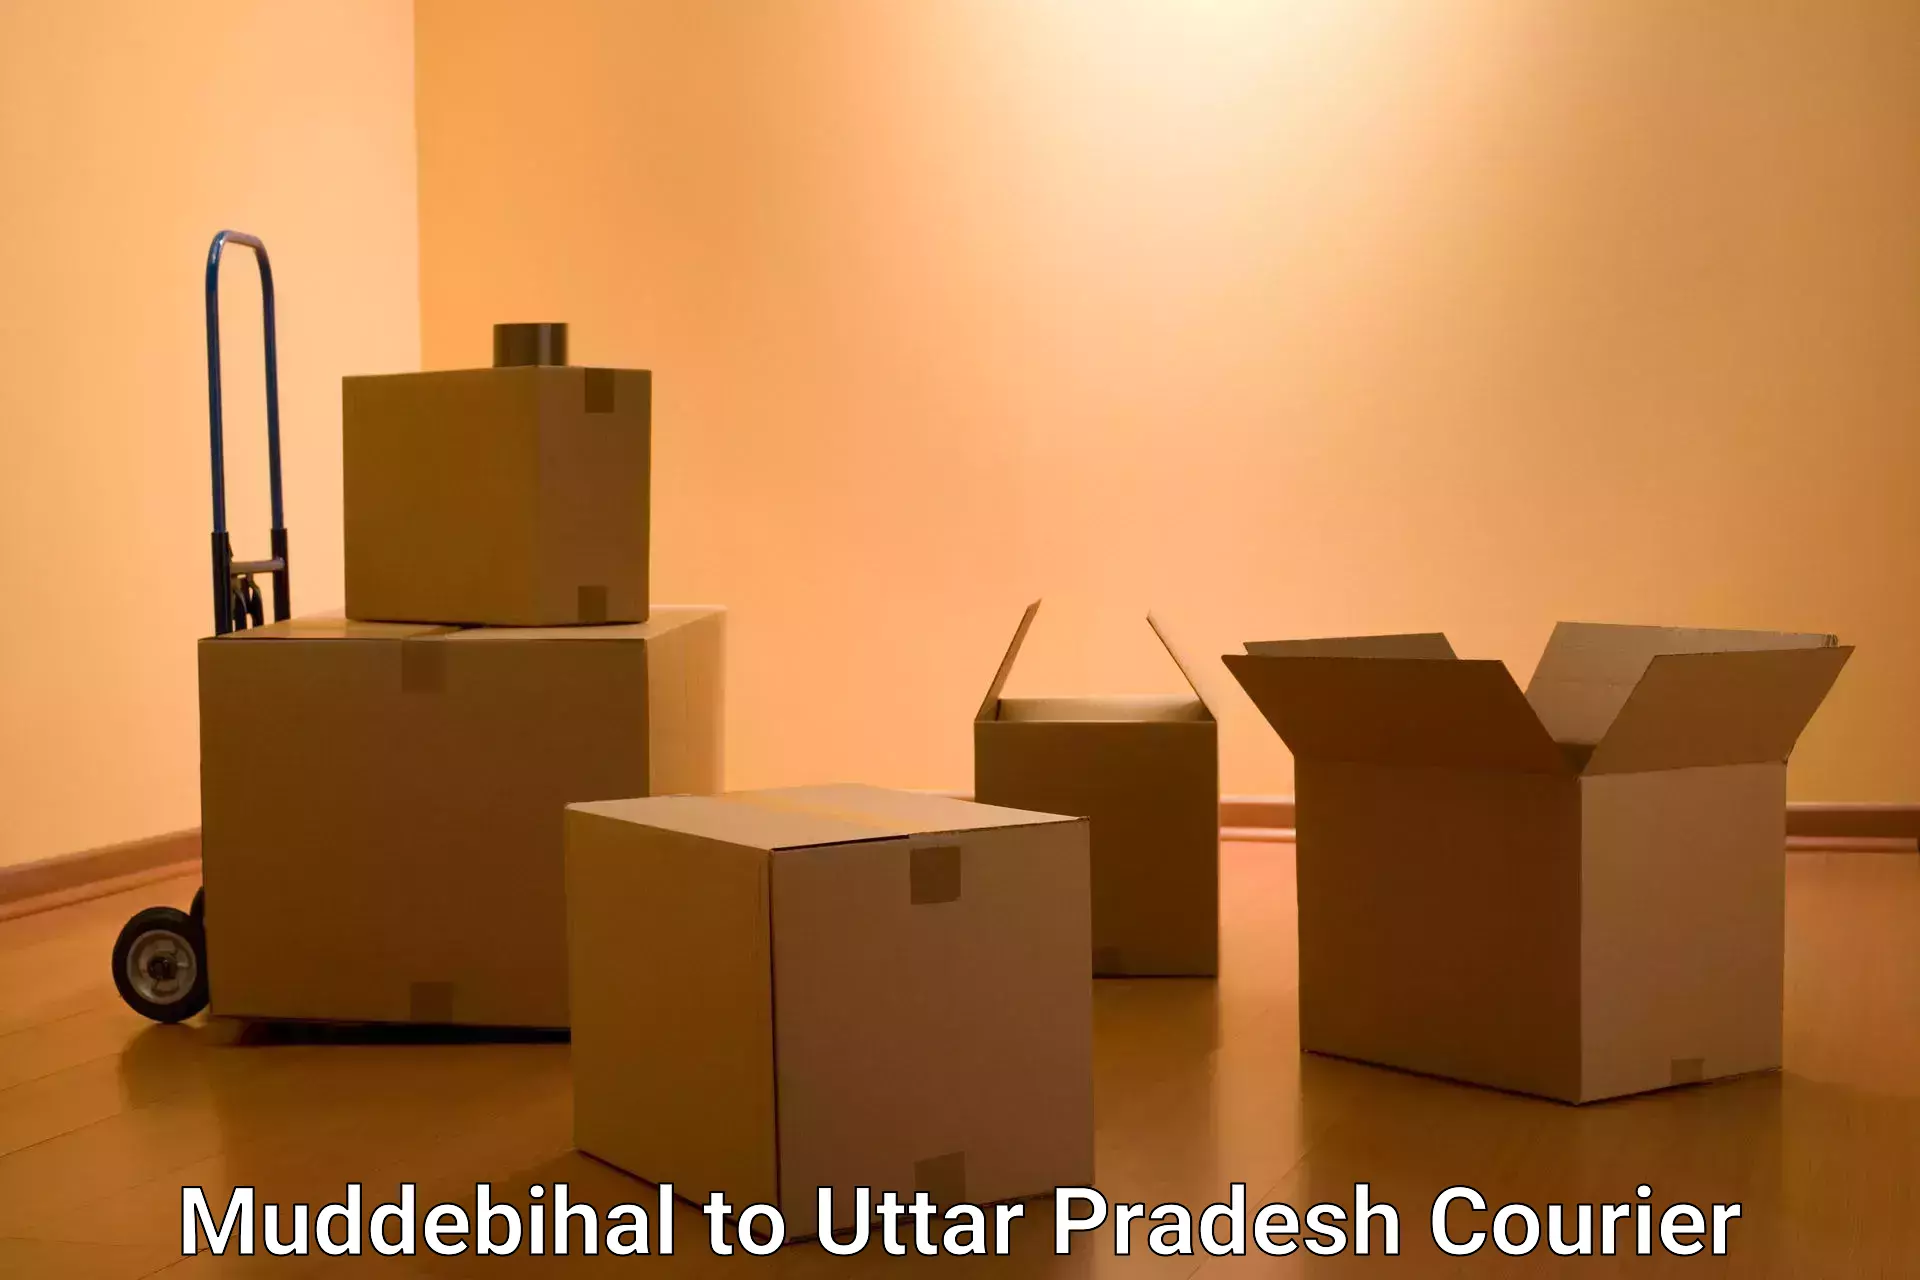 Express delivery network Muddebihal to Uttar Pradesh